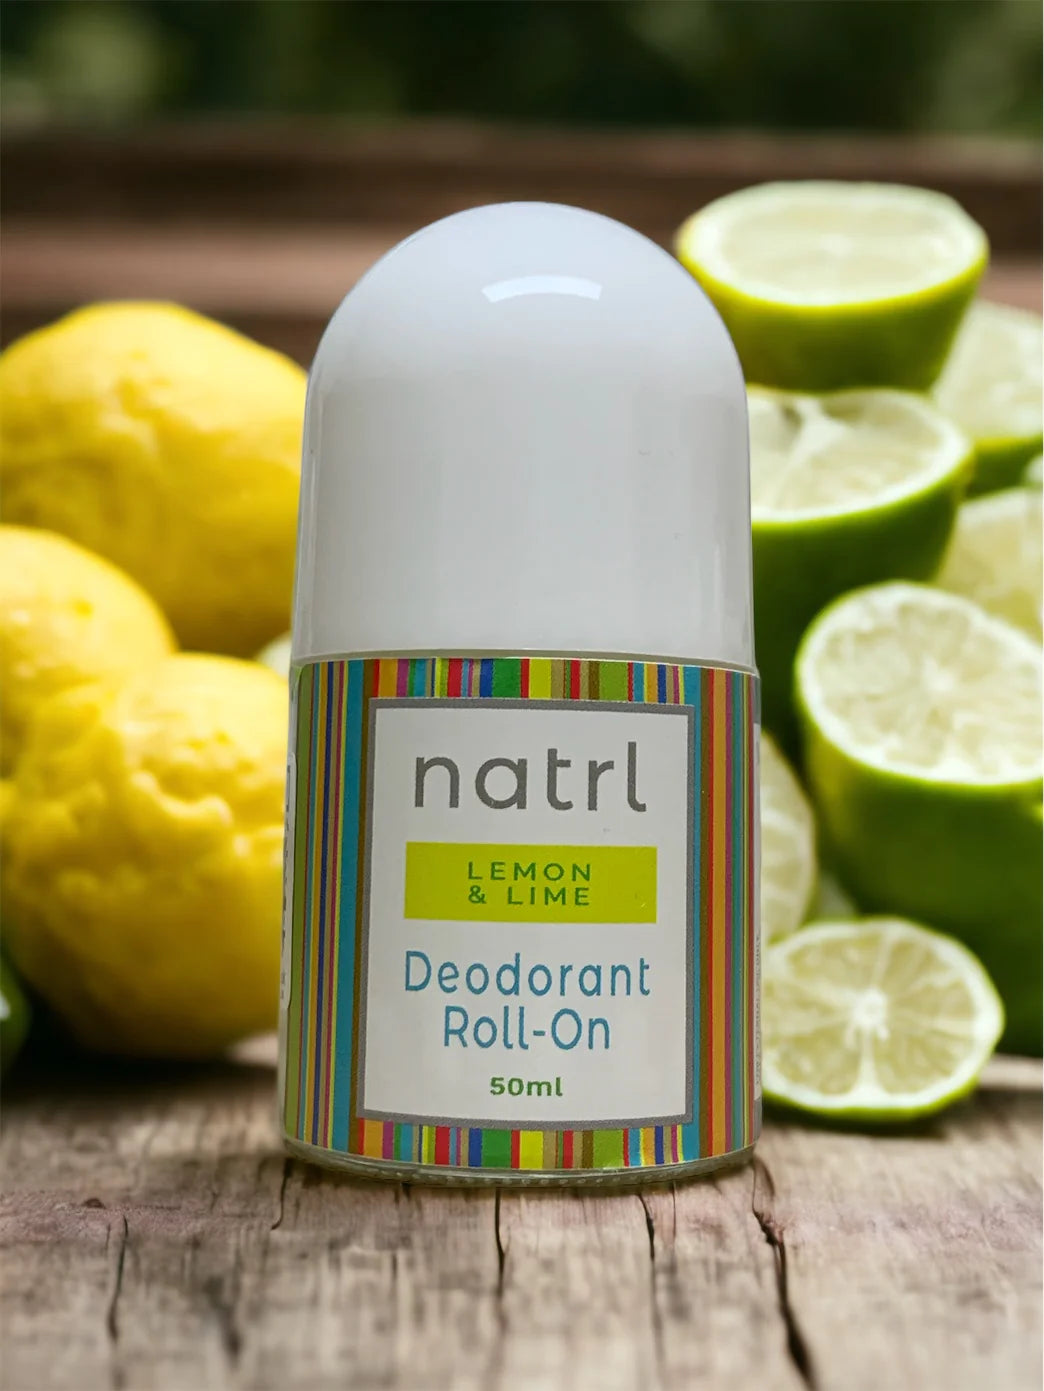 Roll-on natural Deodorant (Natrl Skincare)